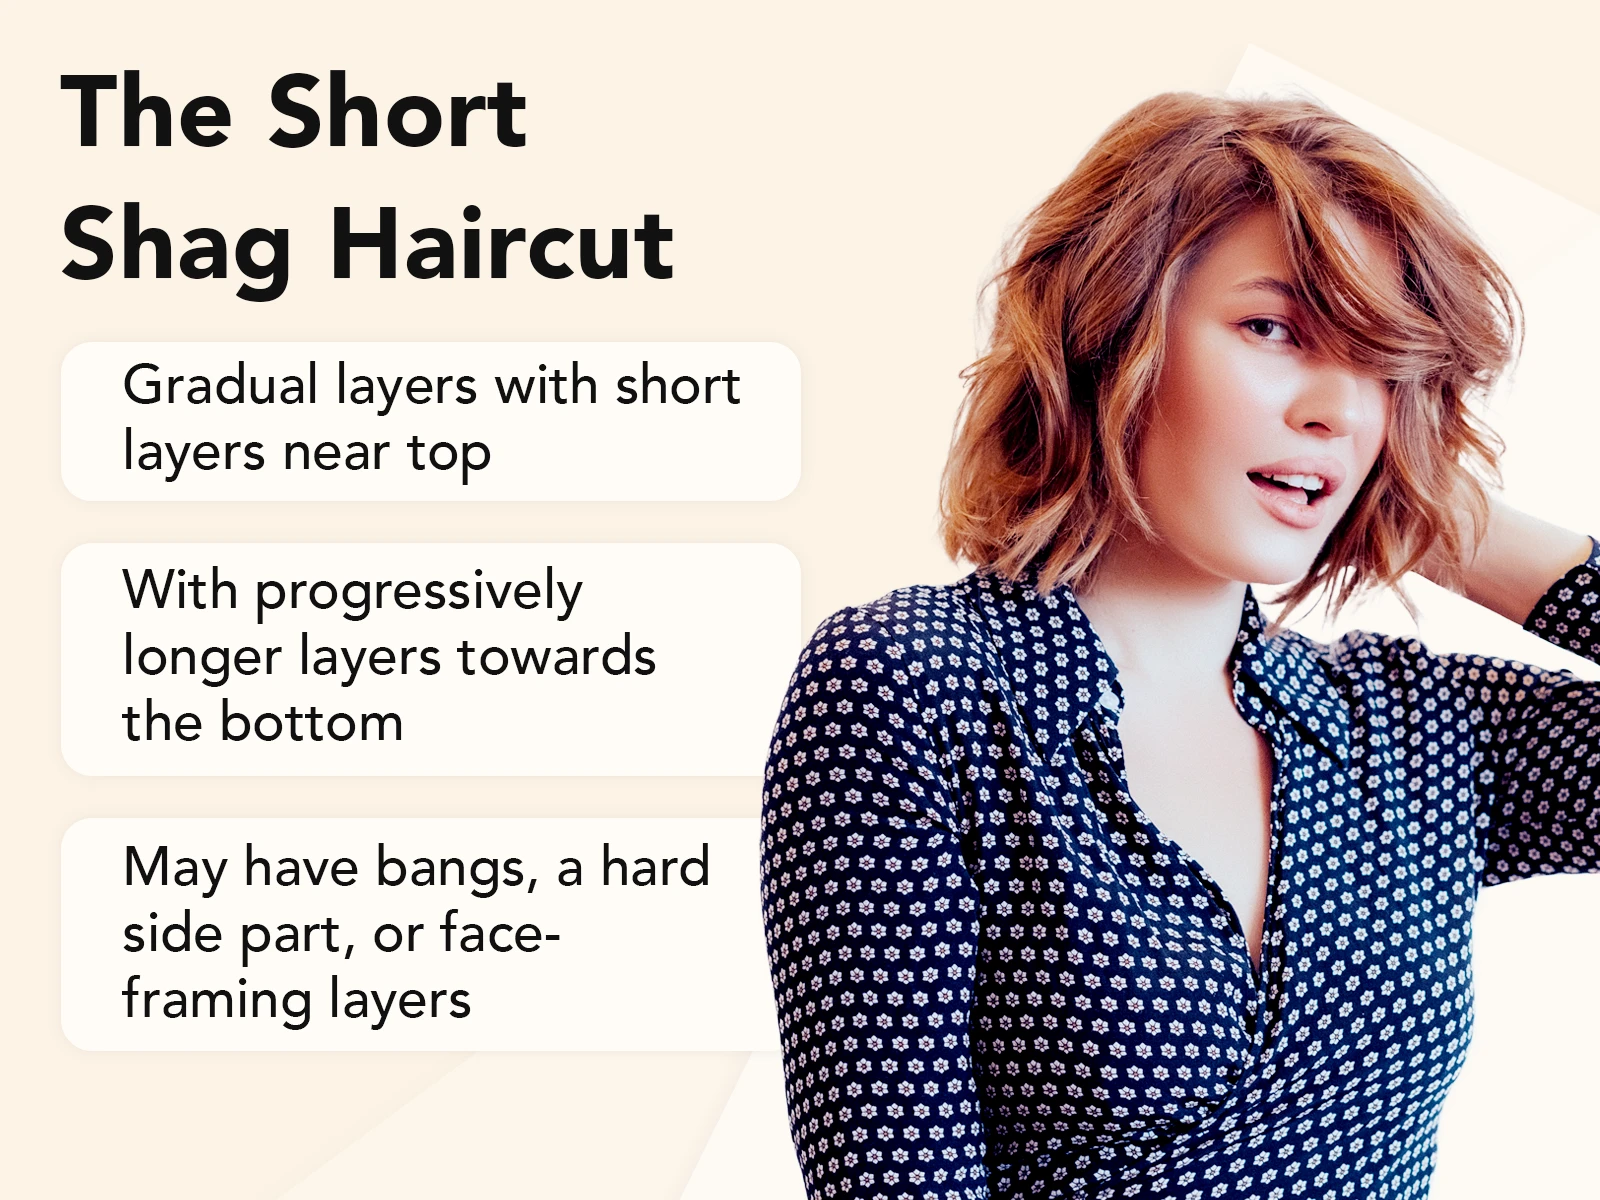 Short Shag Haircut explainer image on a tan background